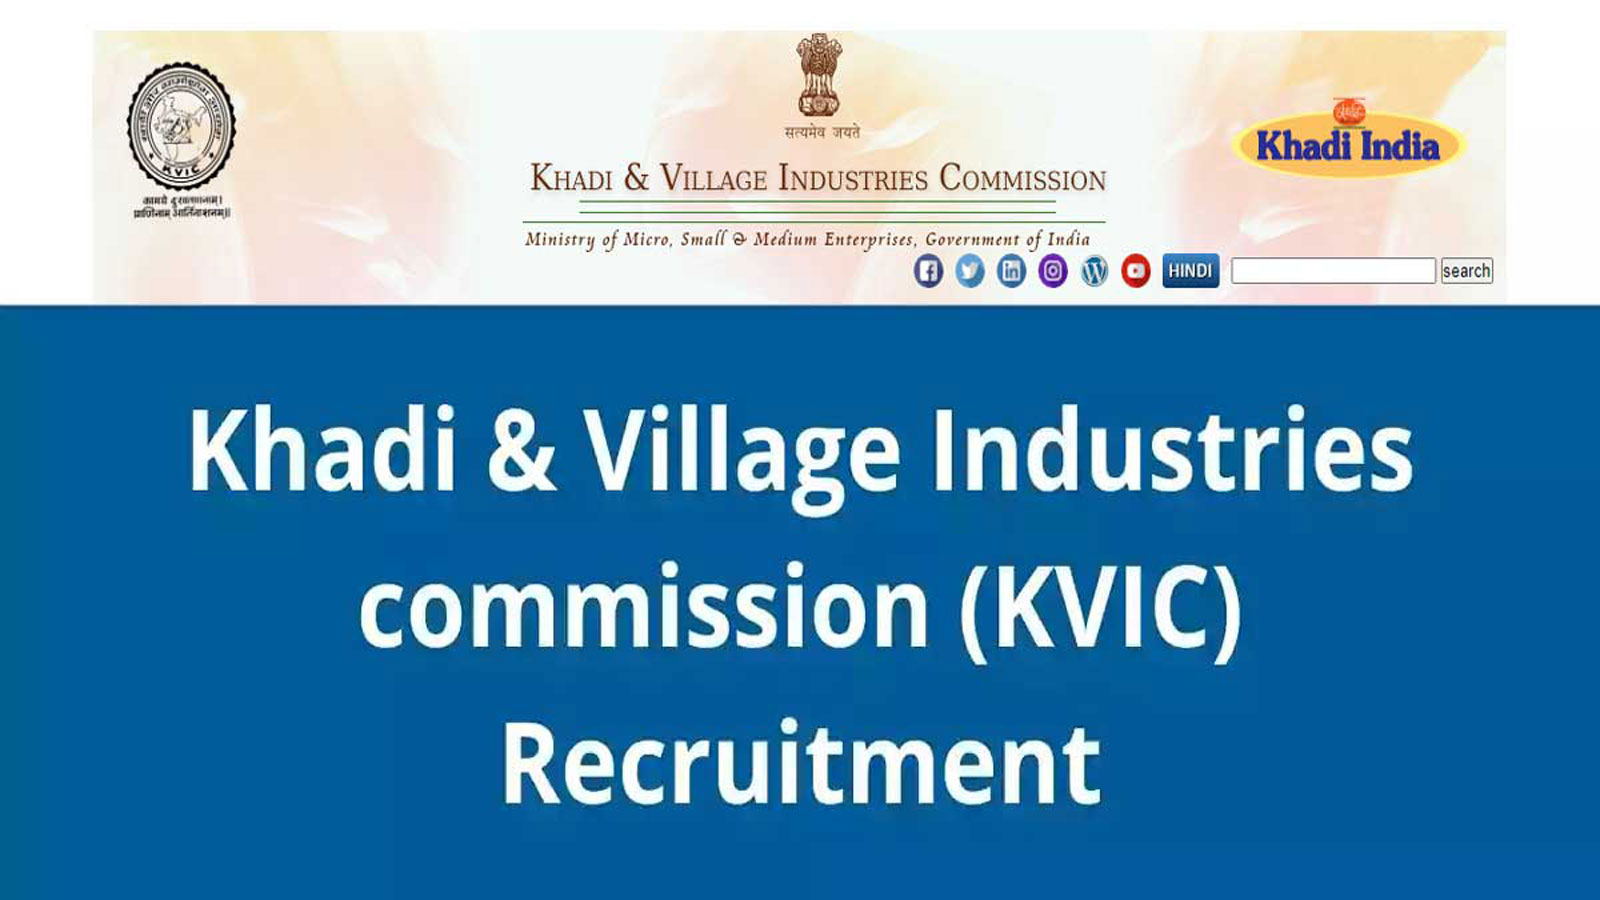 Khadi and Village Industries Commission Recruitment, Last date is Nov 23